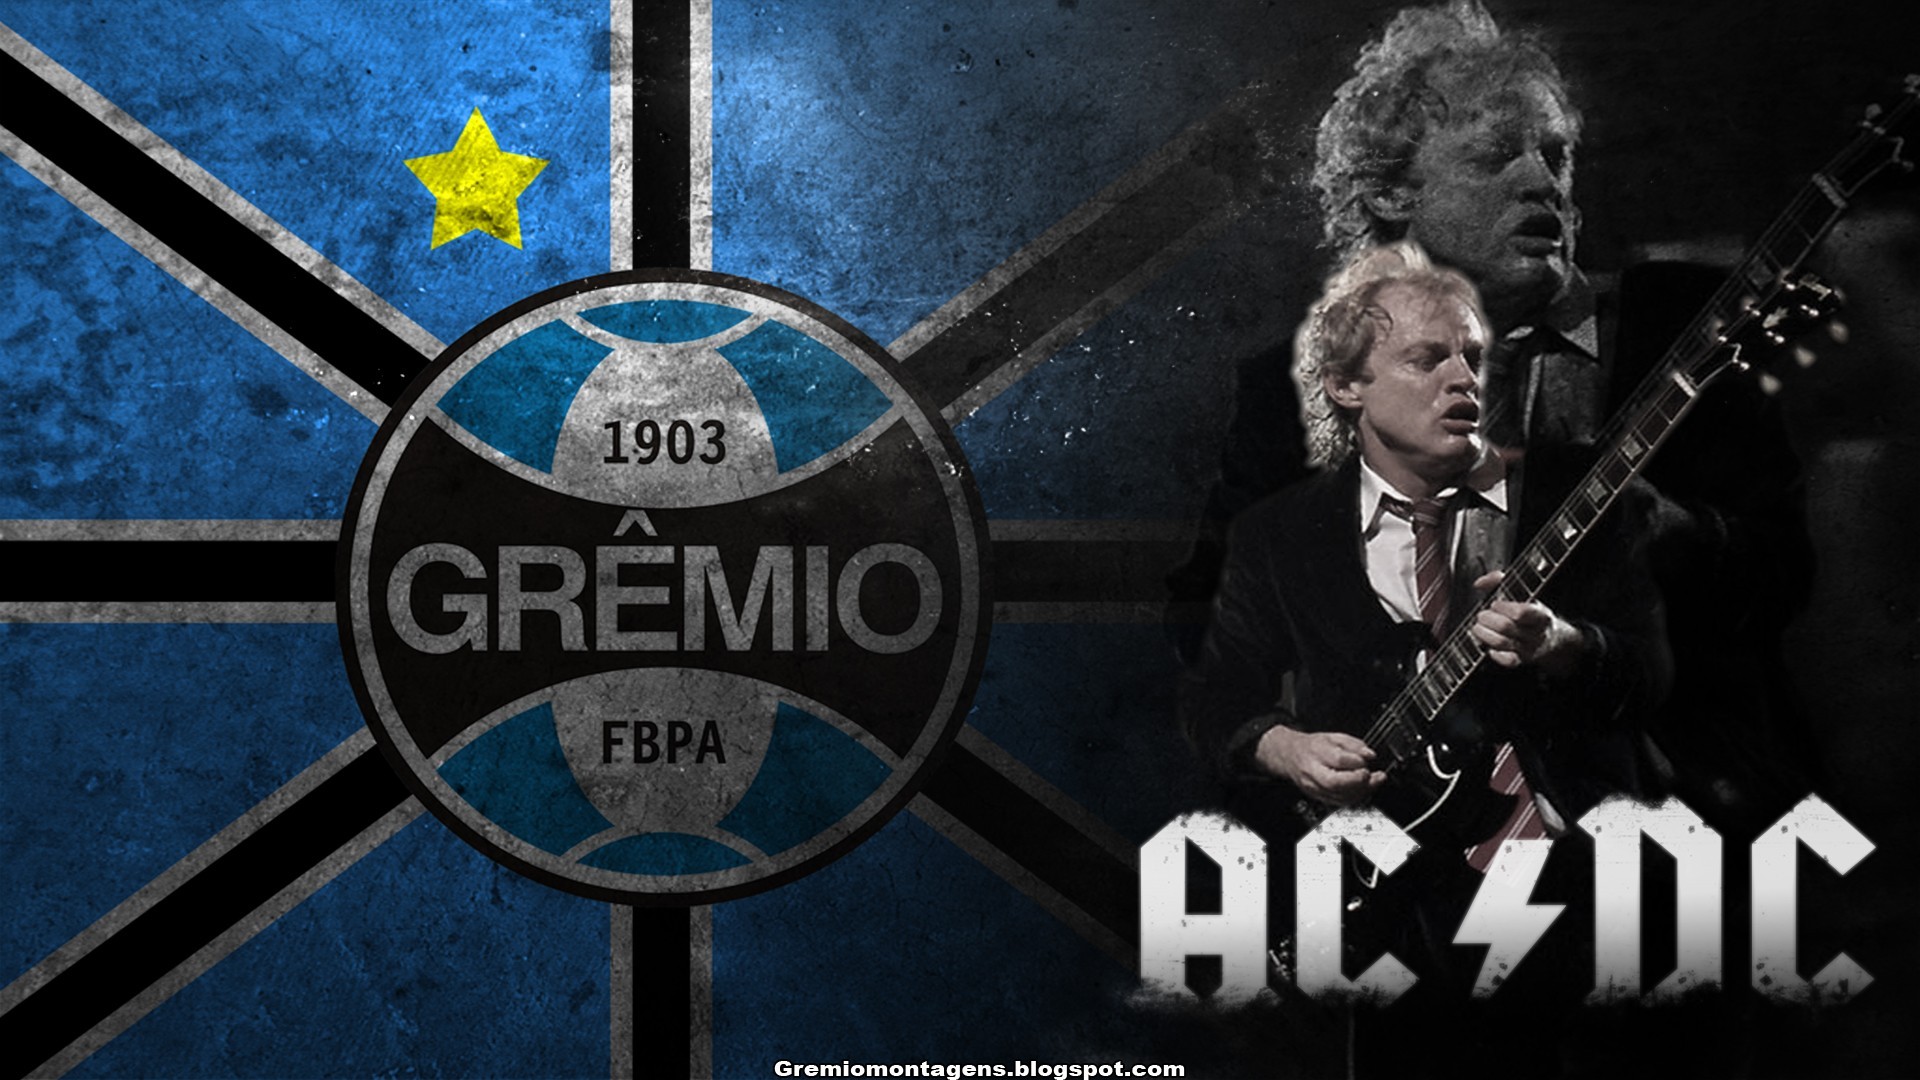 General 1920x1080 AC/DC Gremio Porto Alegre music 1903 (year) logo guitar men band logo